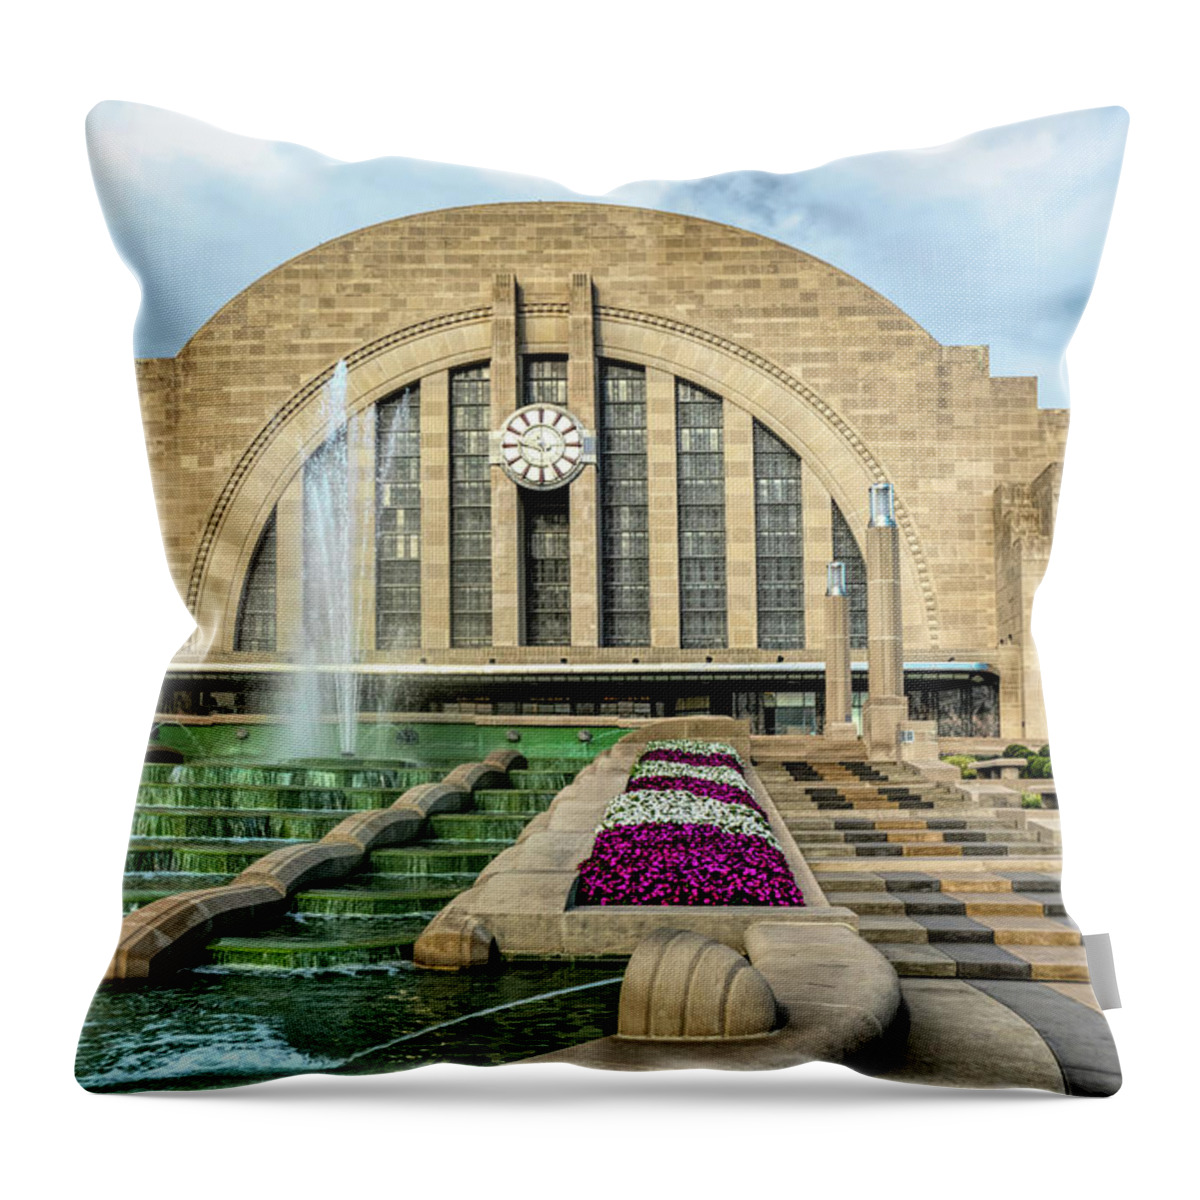 Cincinnati Union Terminal Station Throw Pillow featuring the photograph Cincinnati Union Terminal Station by Sharon Popek